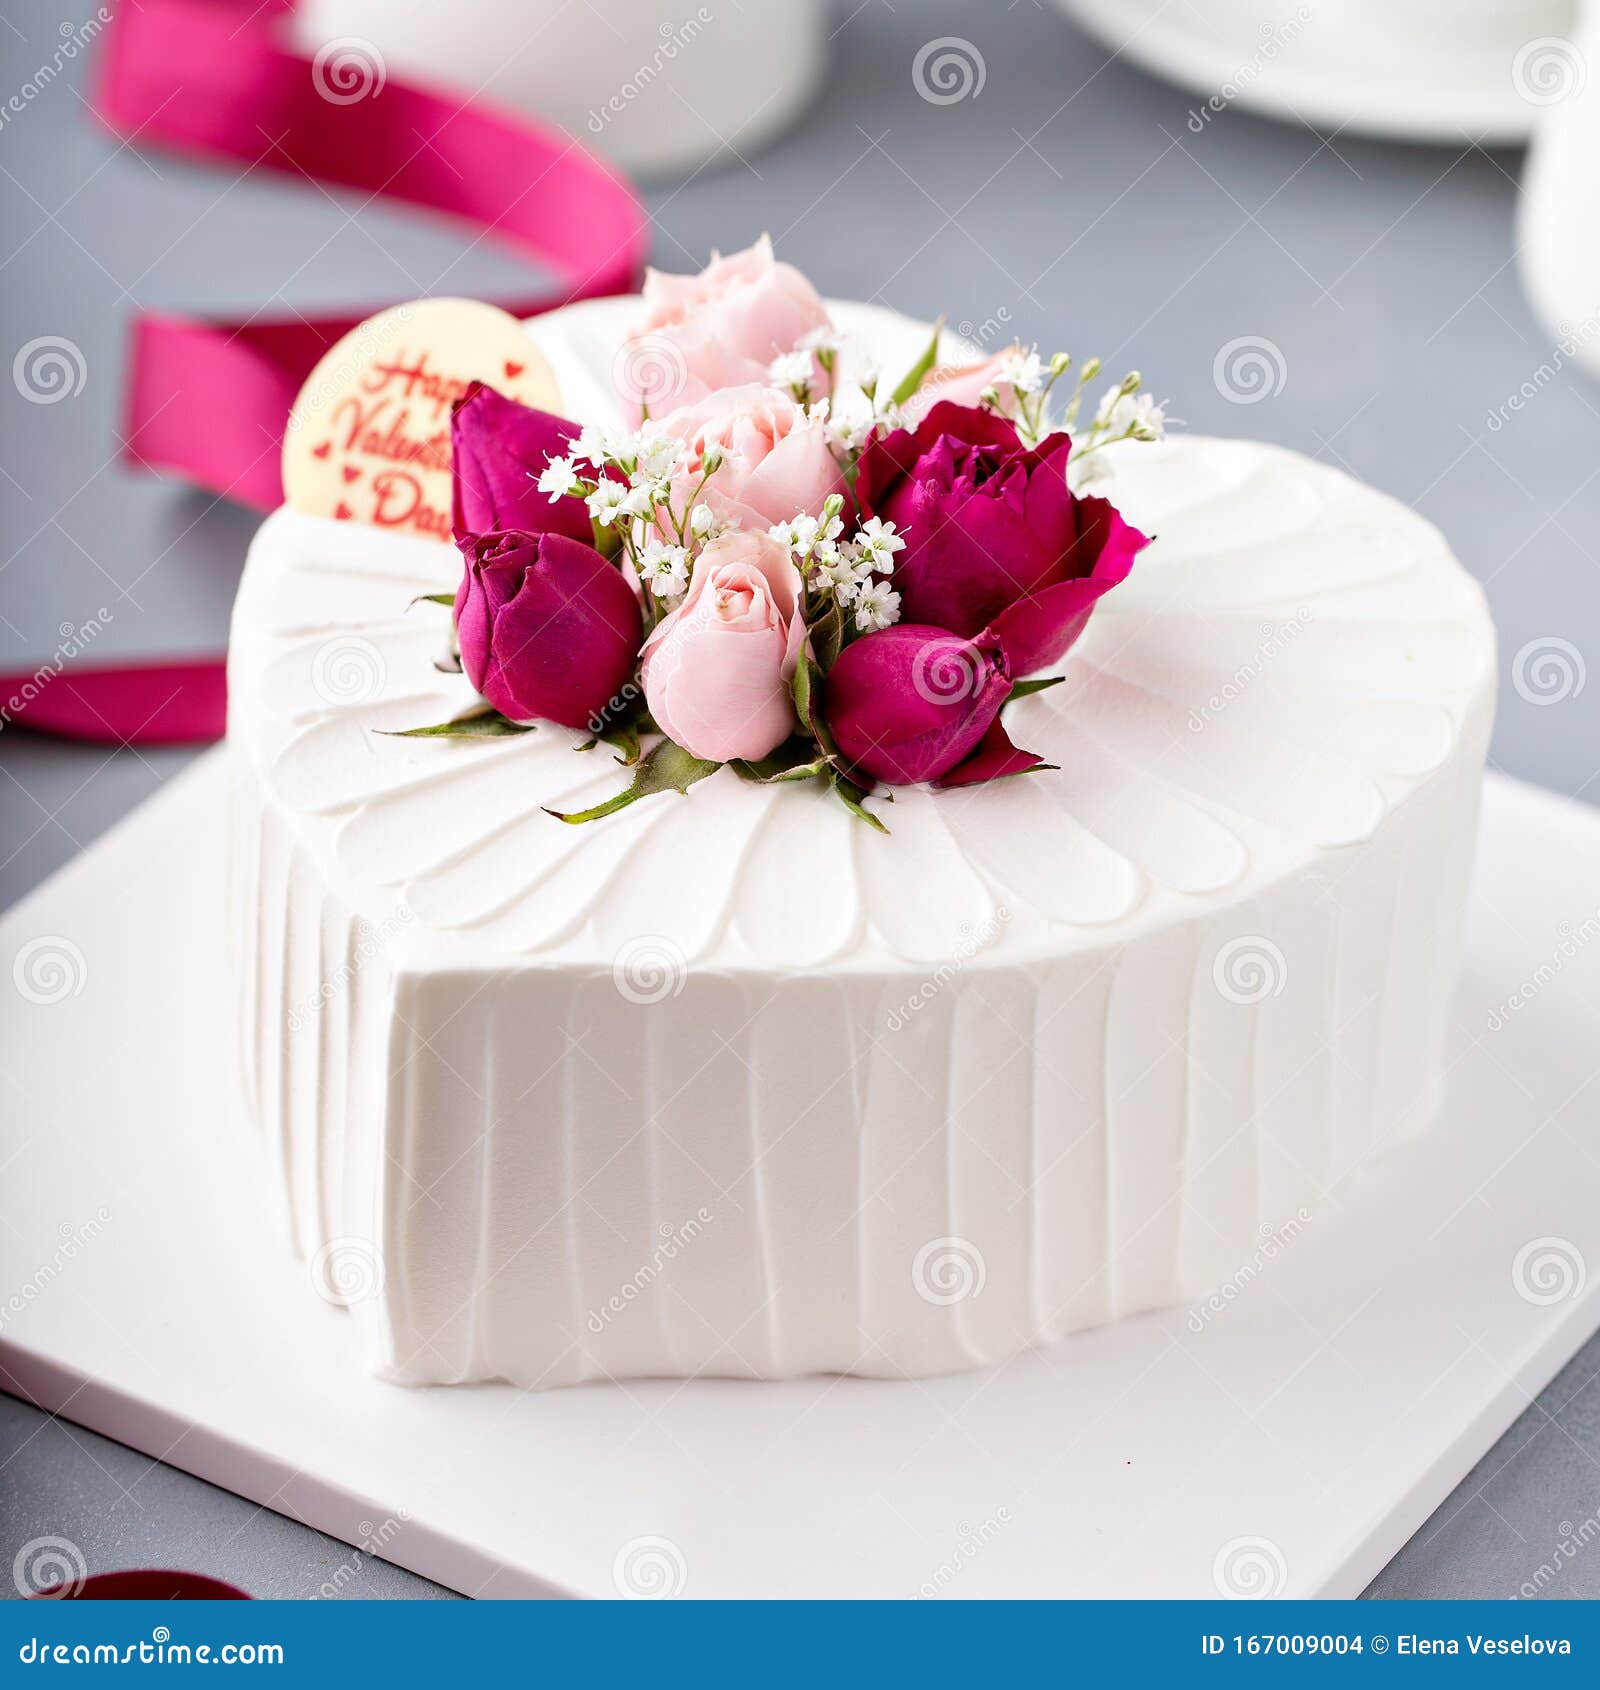 10 Amazing Valentine's Cake Ideas! - American Cake Decorating